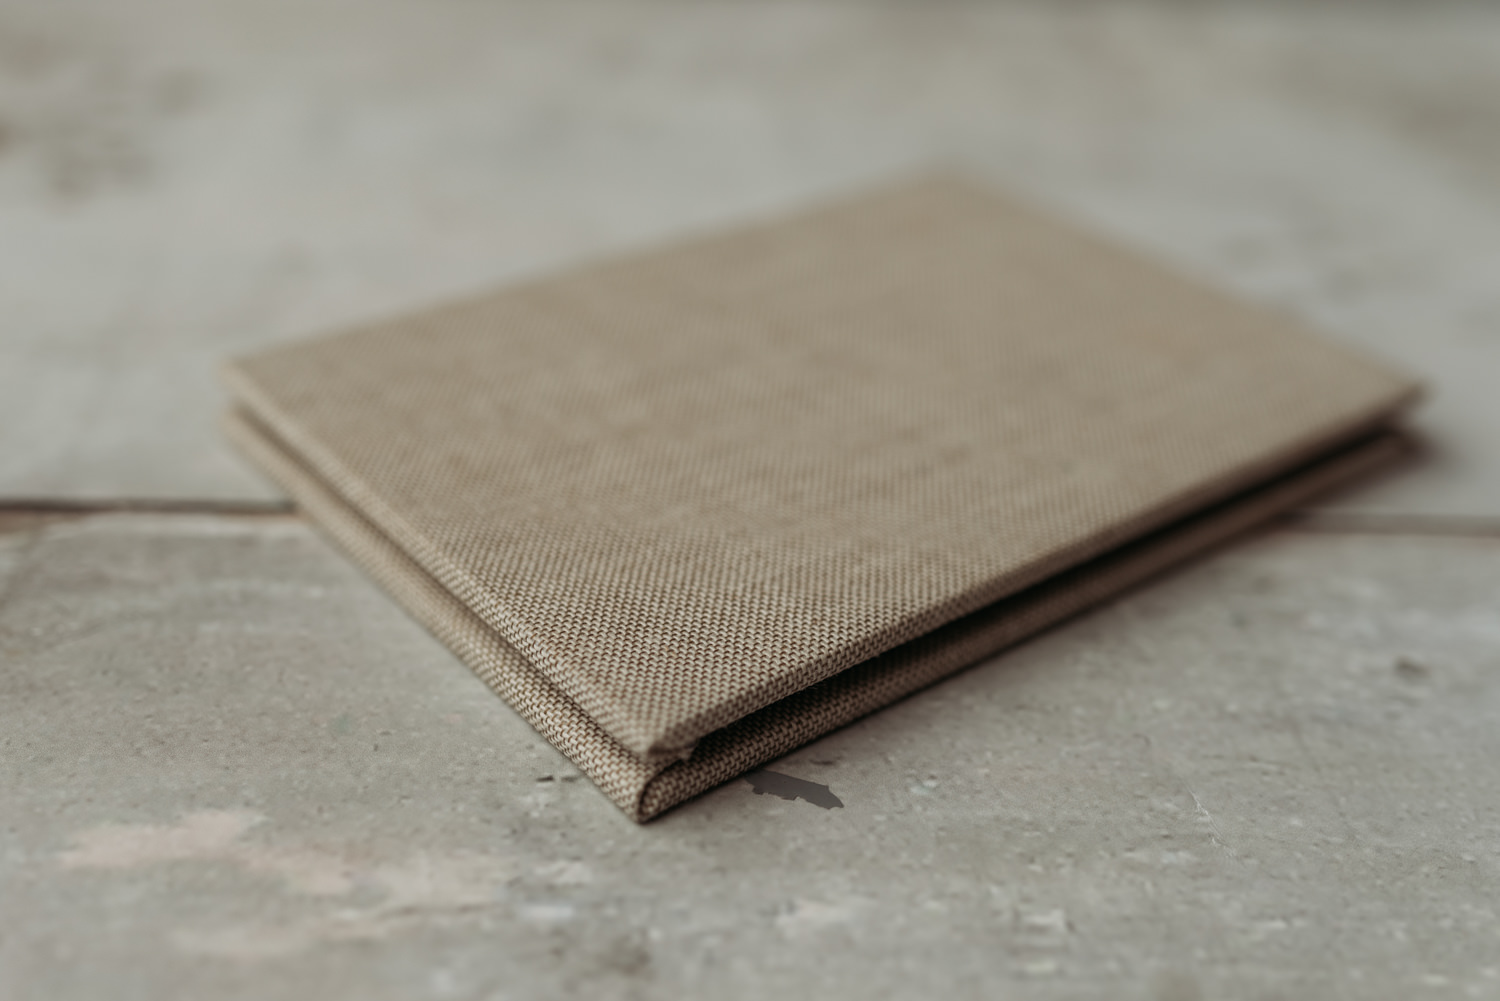 Natural linen cover on Brag Book. (Copy) (Copy)